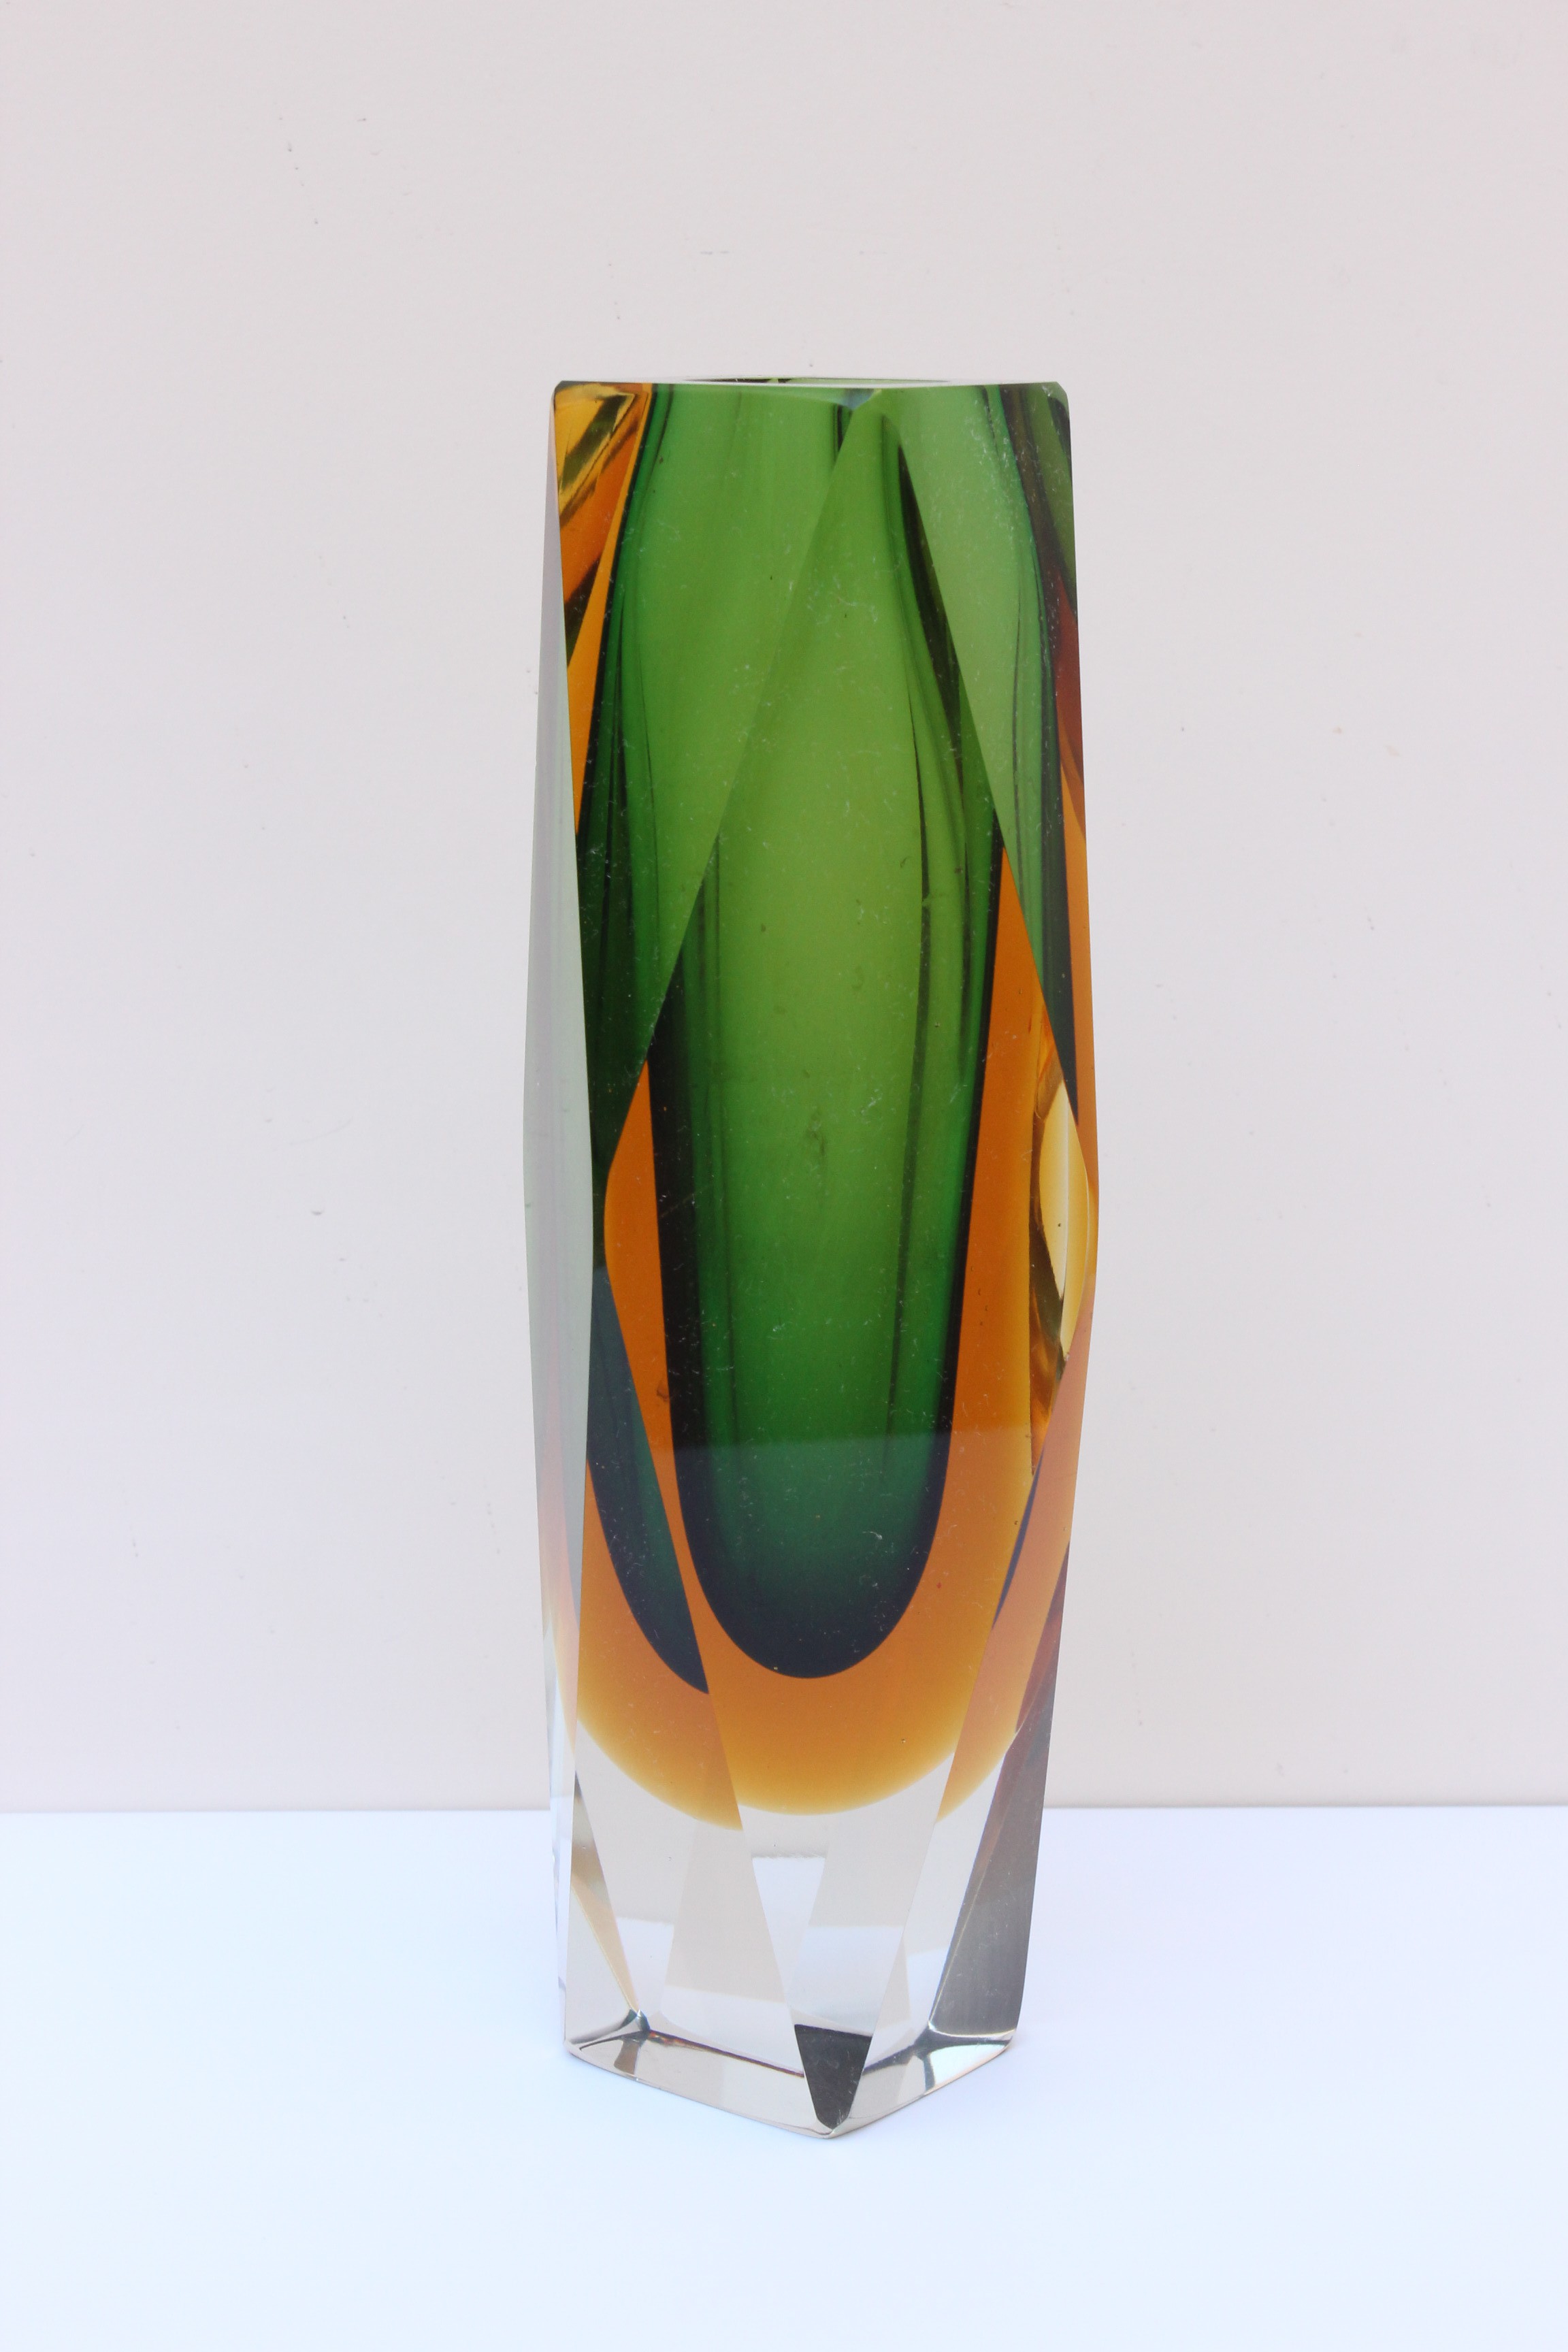 Sommerso Vase In Murano Glass 1970s Design Market